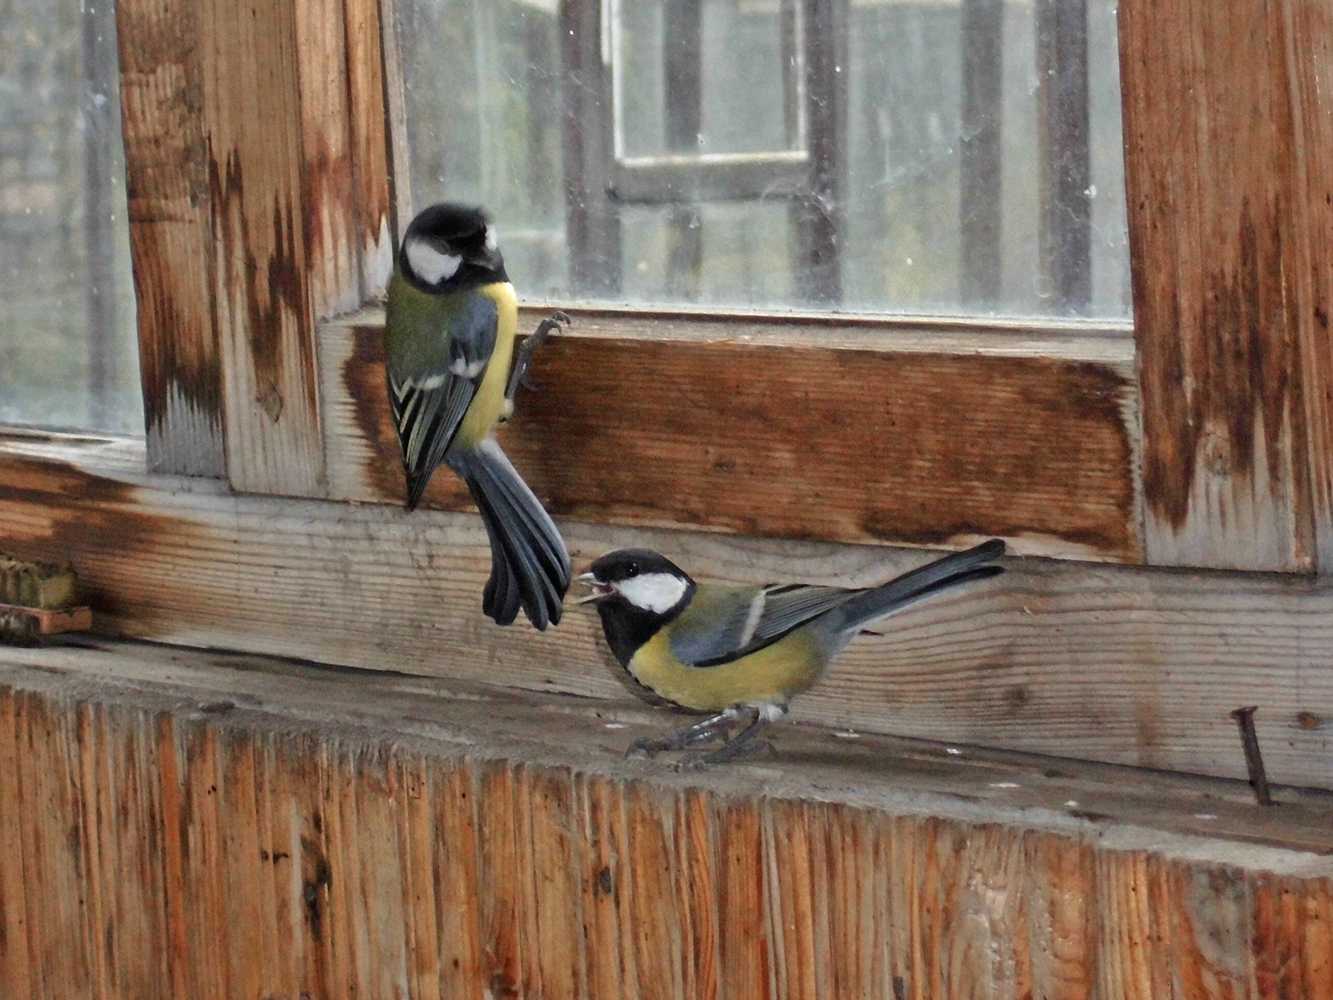 Птица села на окно или подоконник: значение приметы